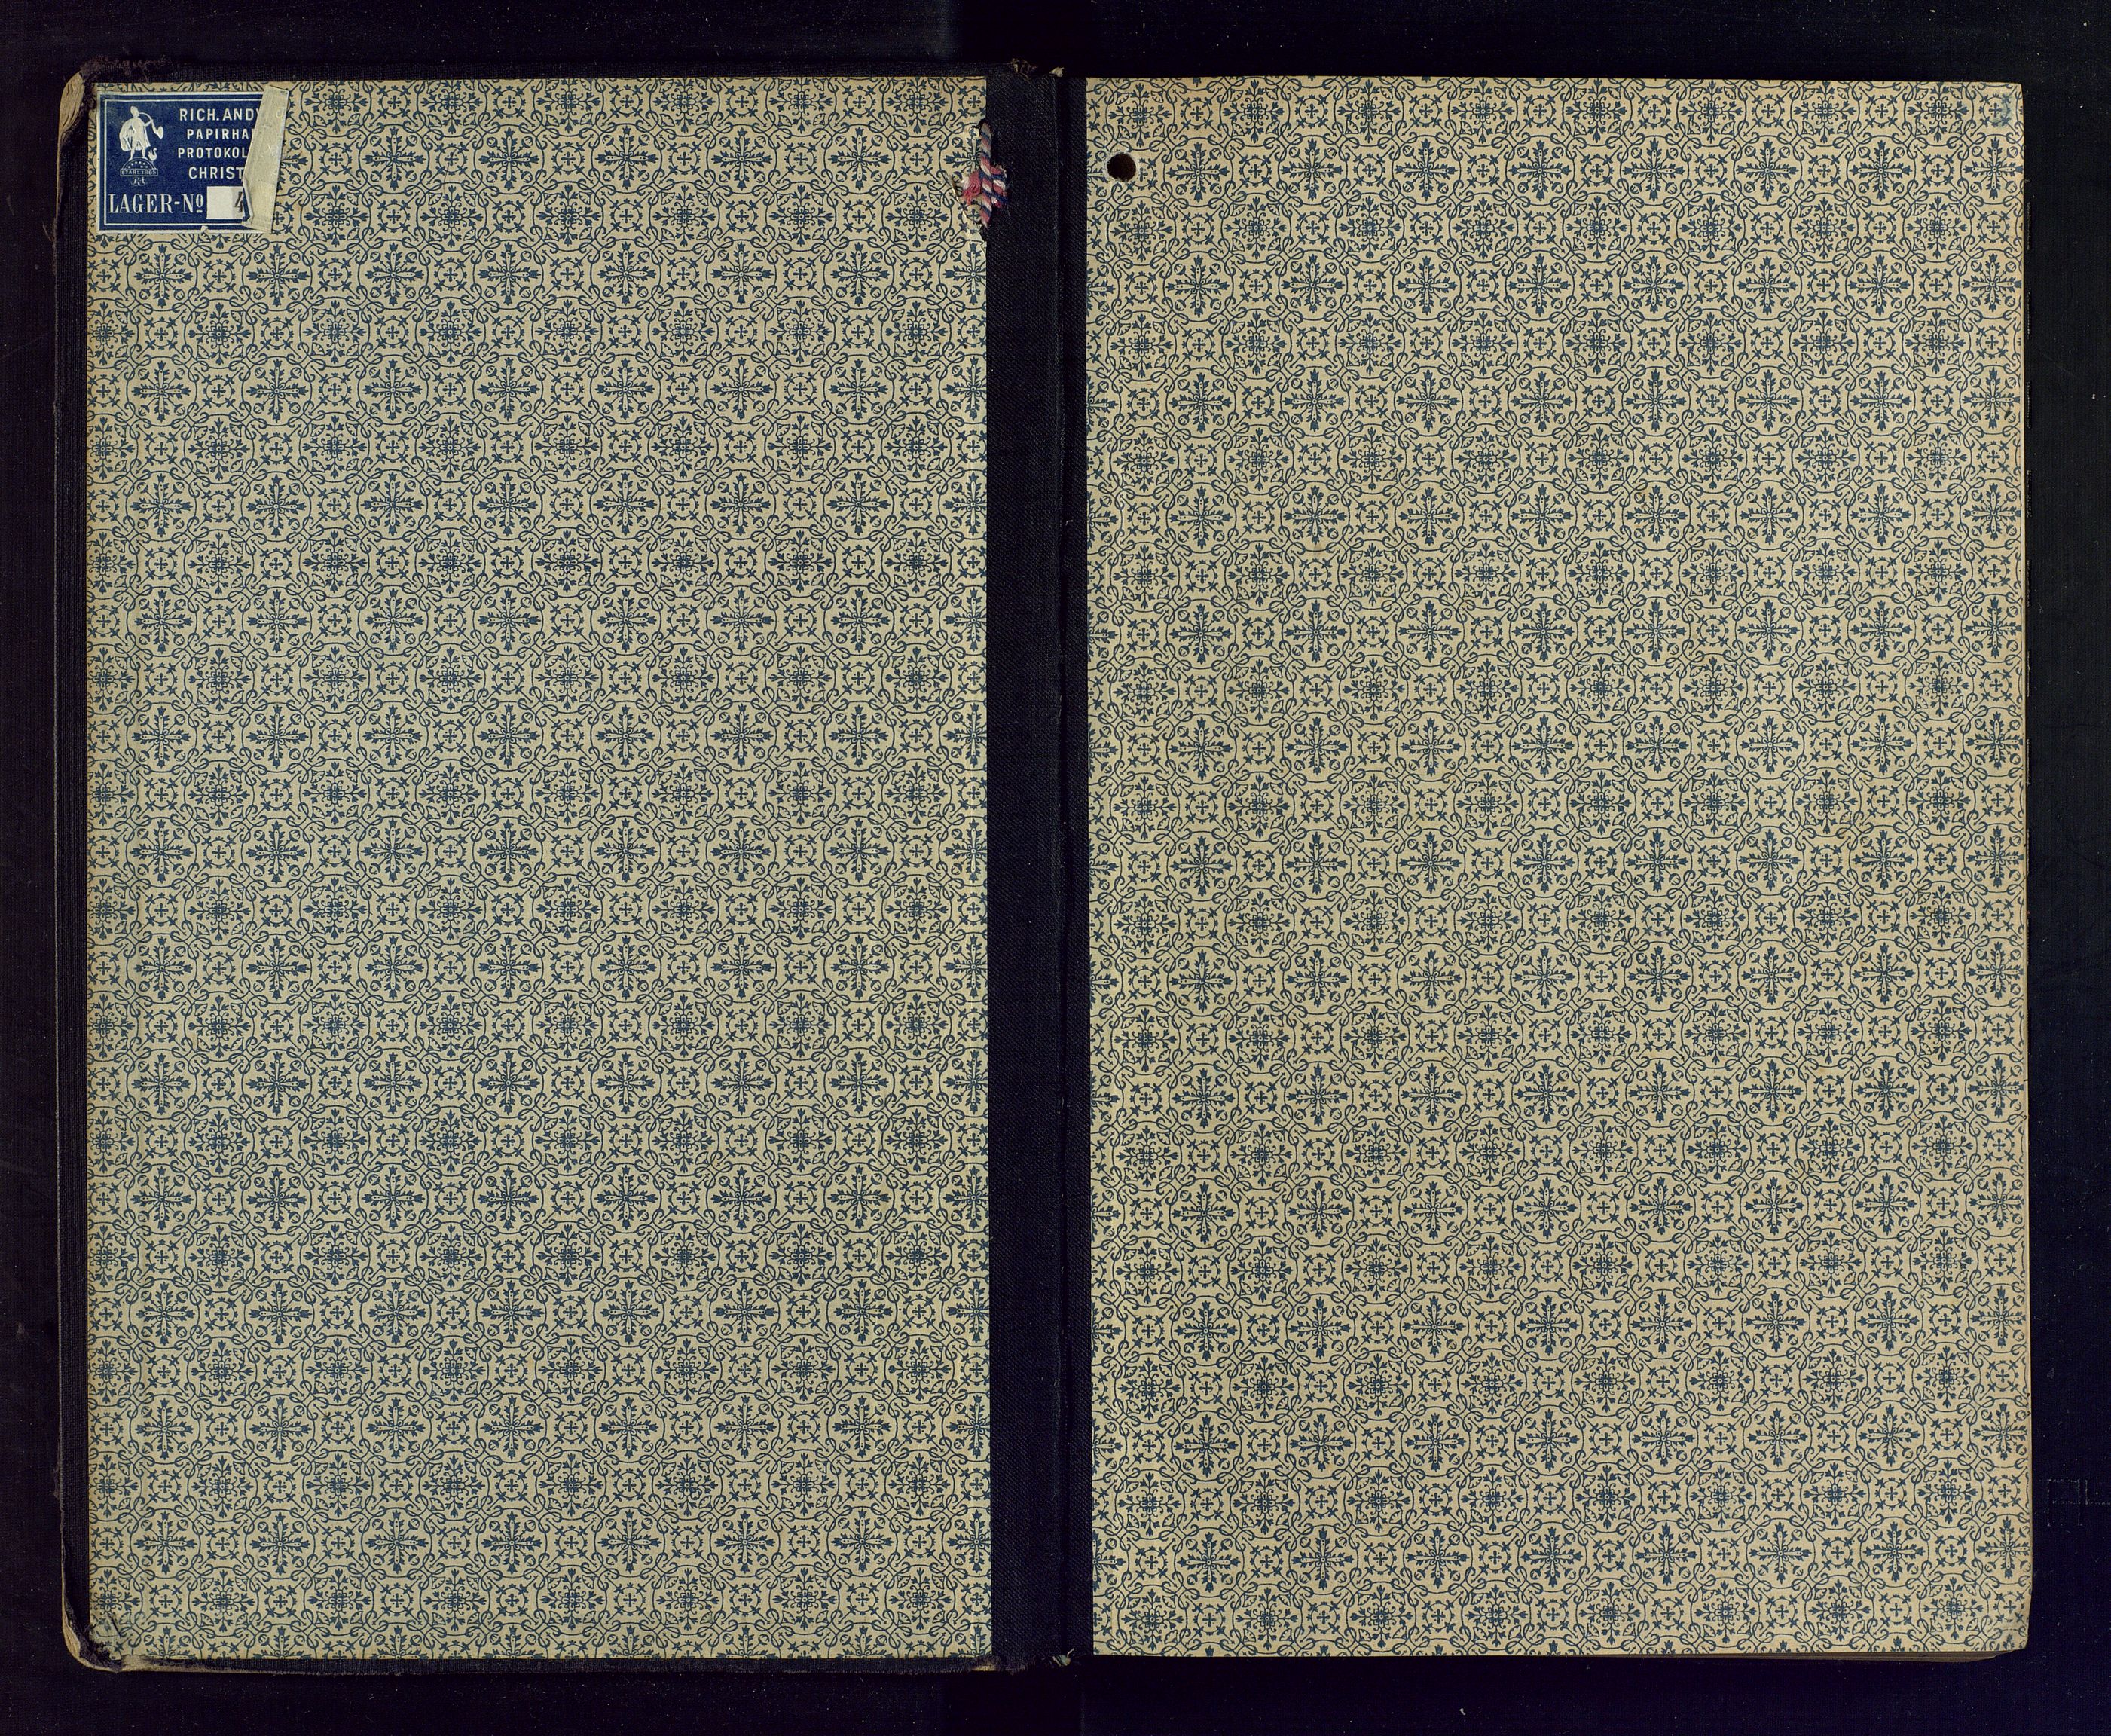 Eiker, Modum og Sigdal sorenskriveri, SAKO/A-123/F/Fc/L0036: Ekstrarettsprotokoll - sorenskriveriet, 1919-1922